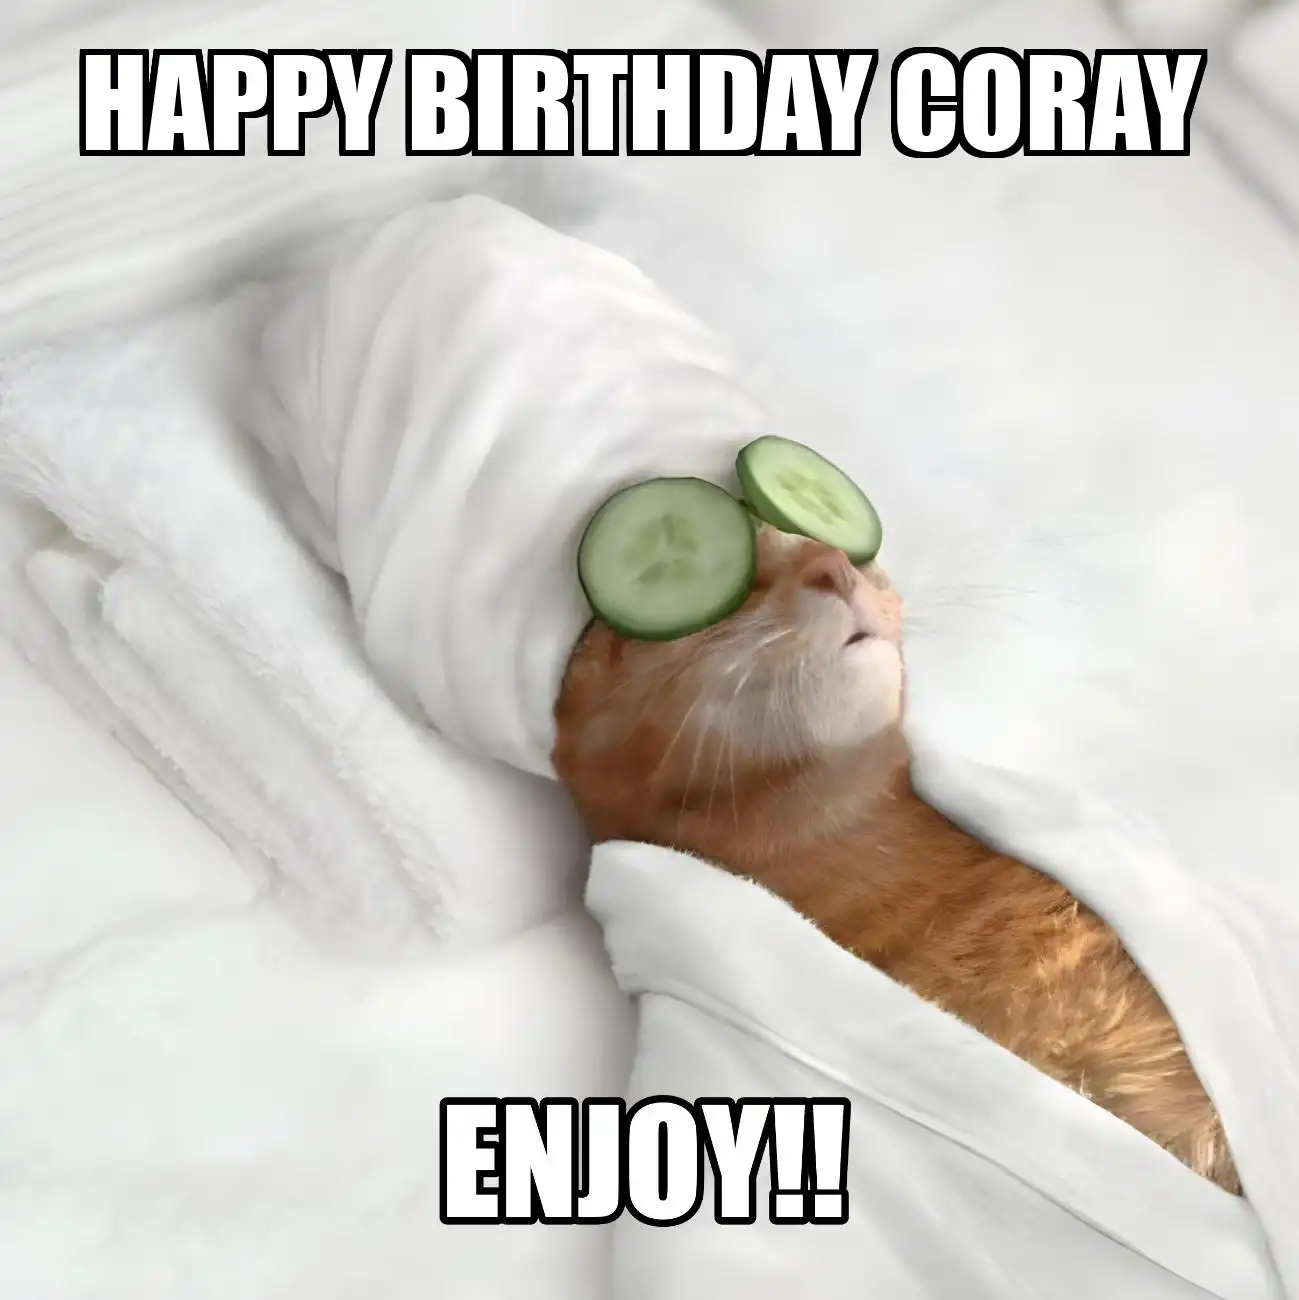 Happy Birthday Coray Enjoy Cat Meme